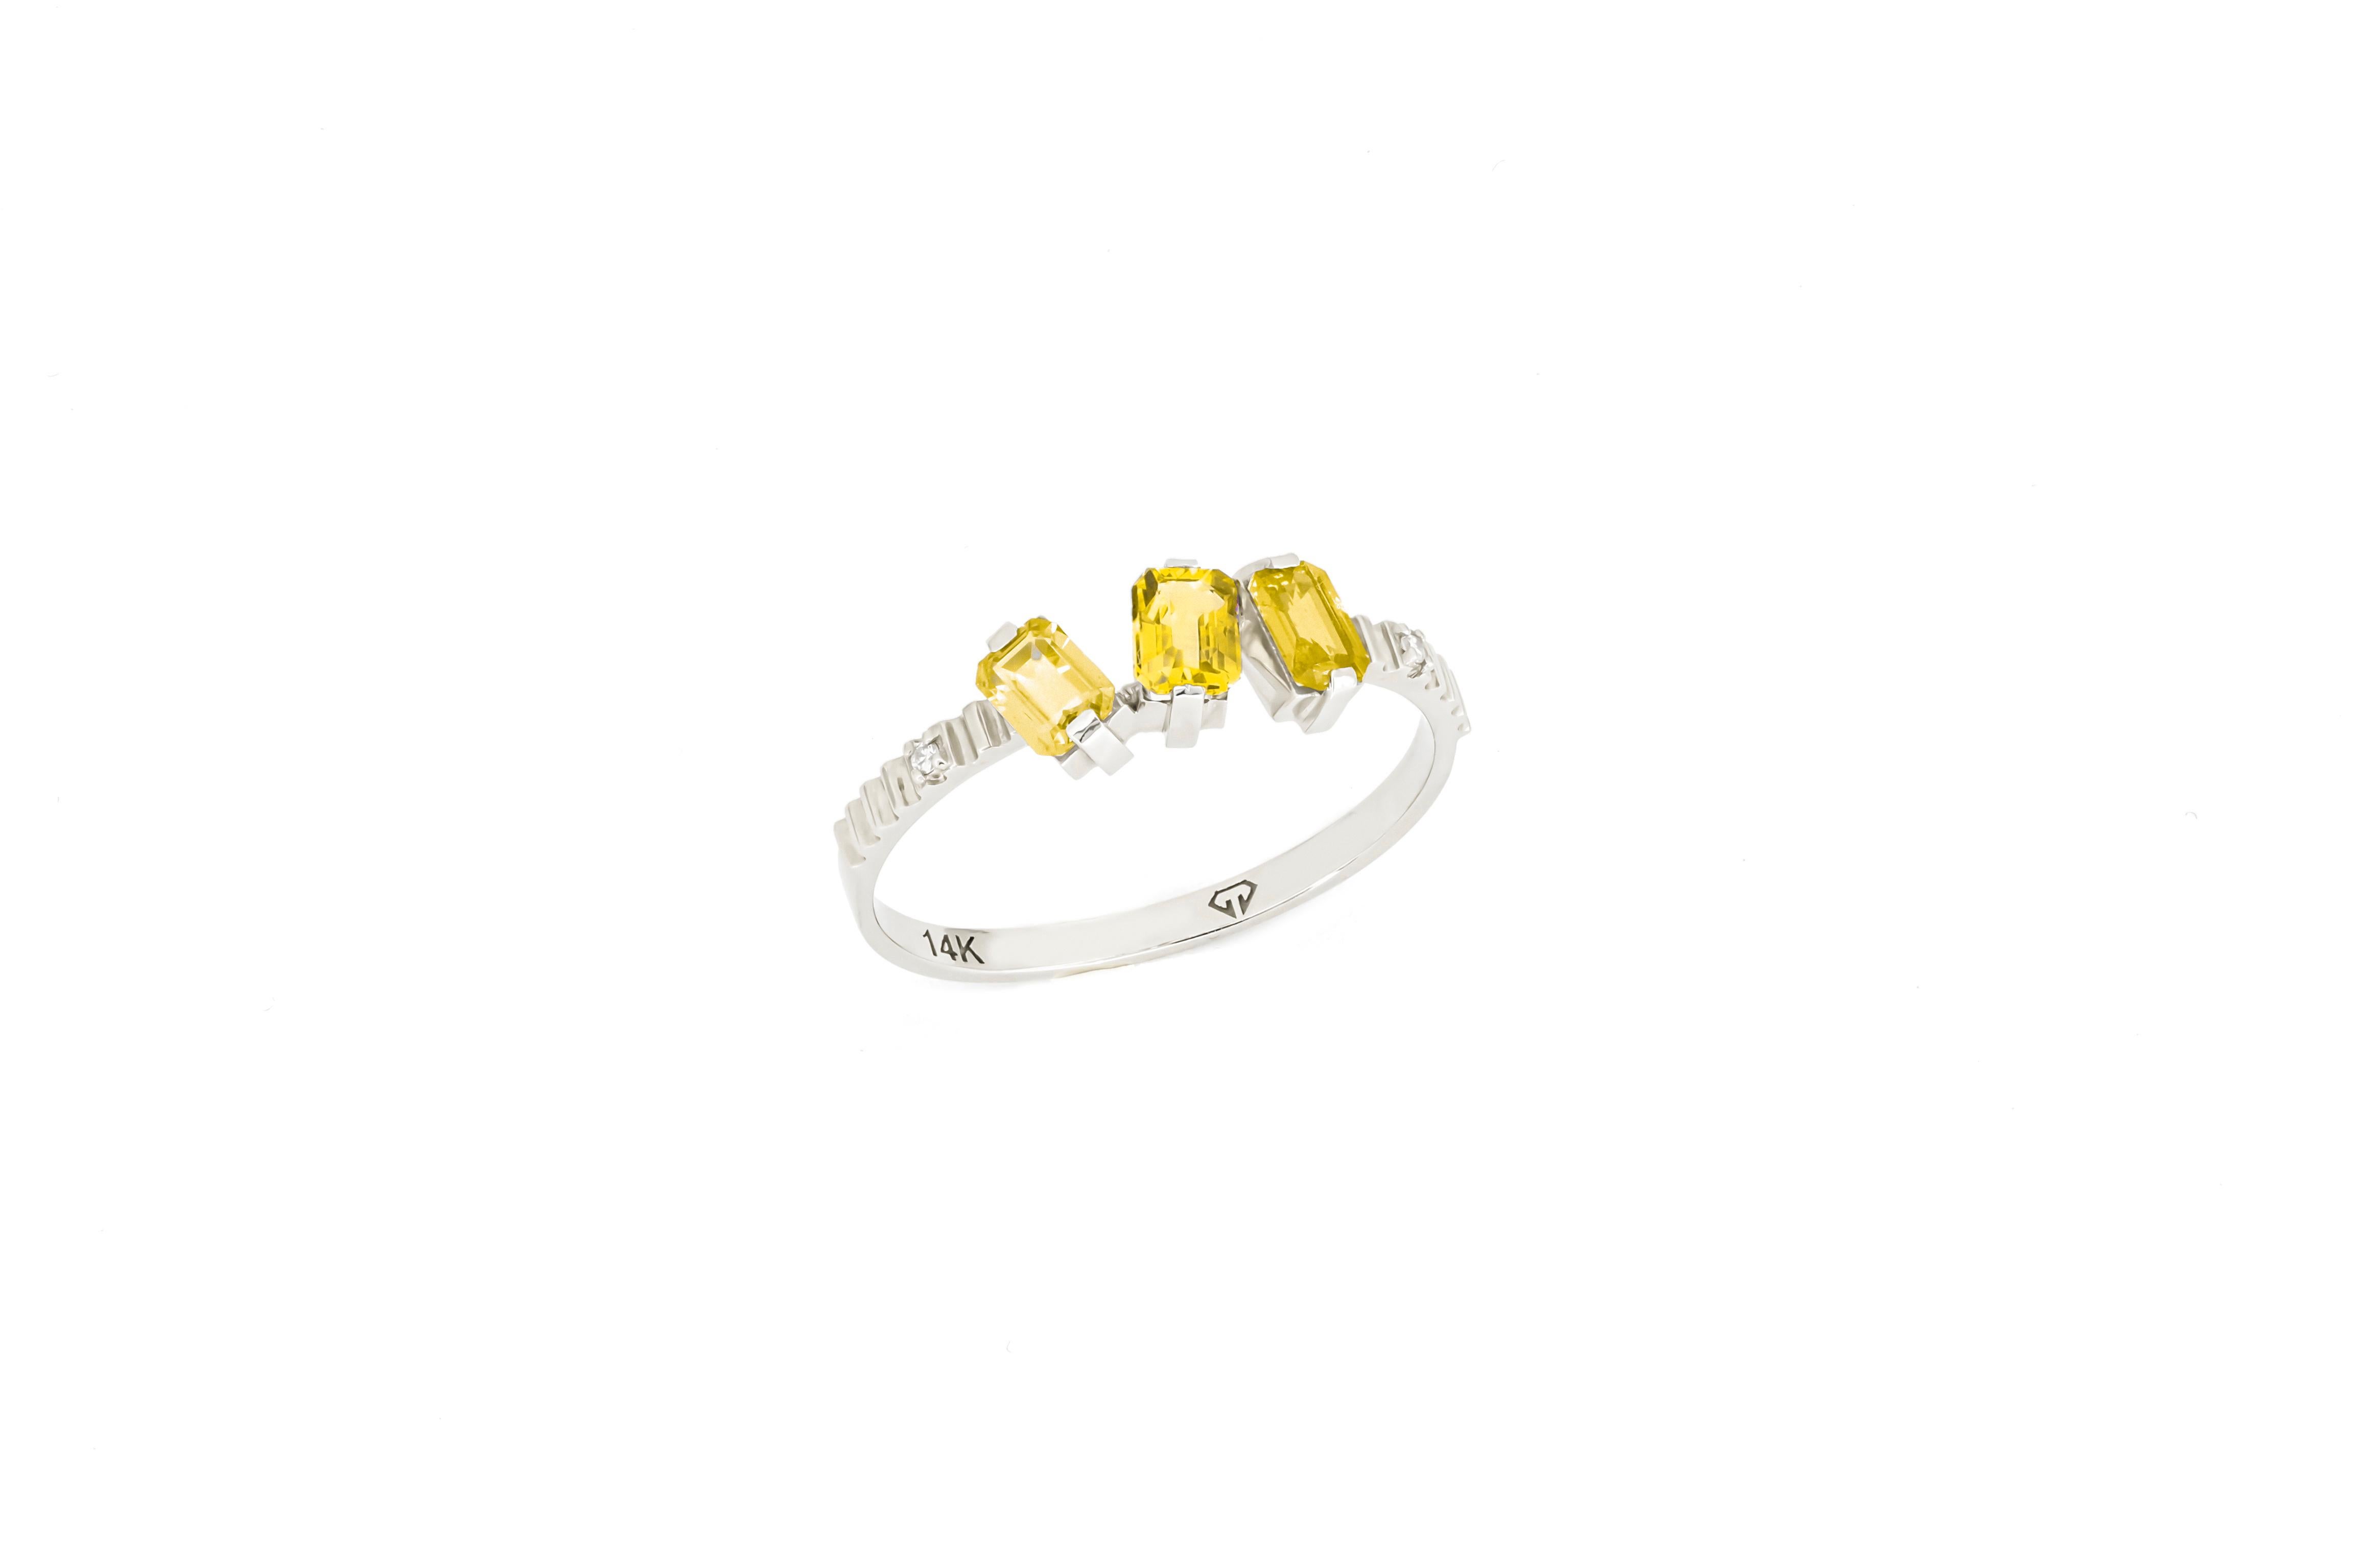 For Sale:  Monochrome yellow gemstone 14k ring. 6